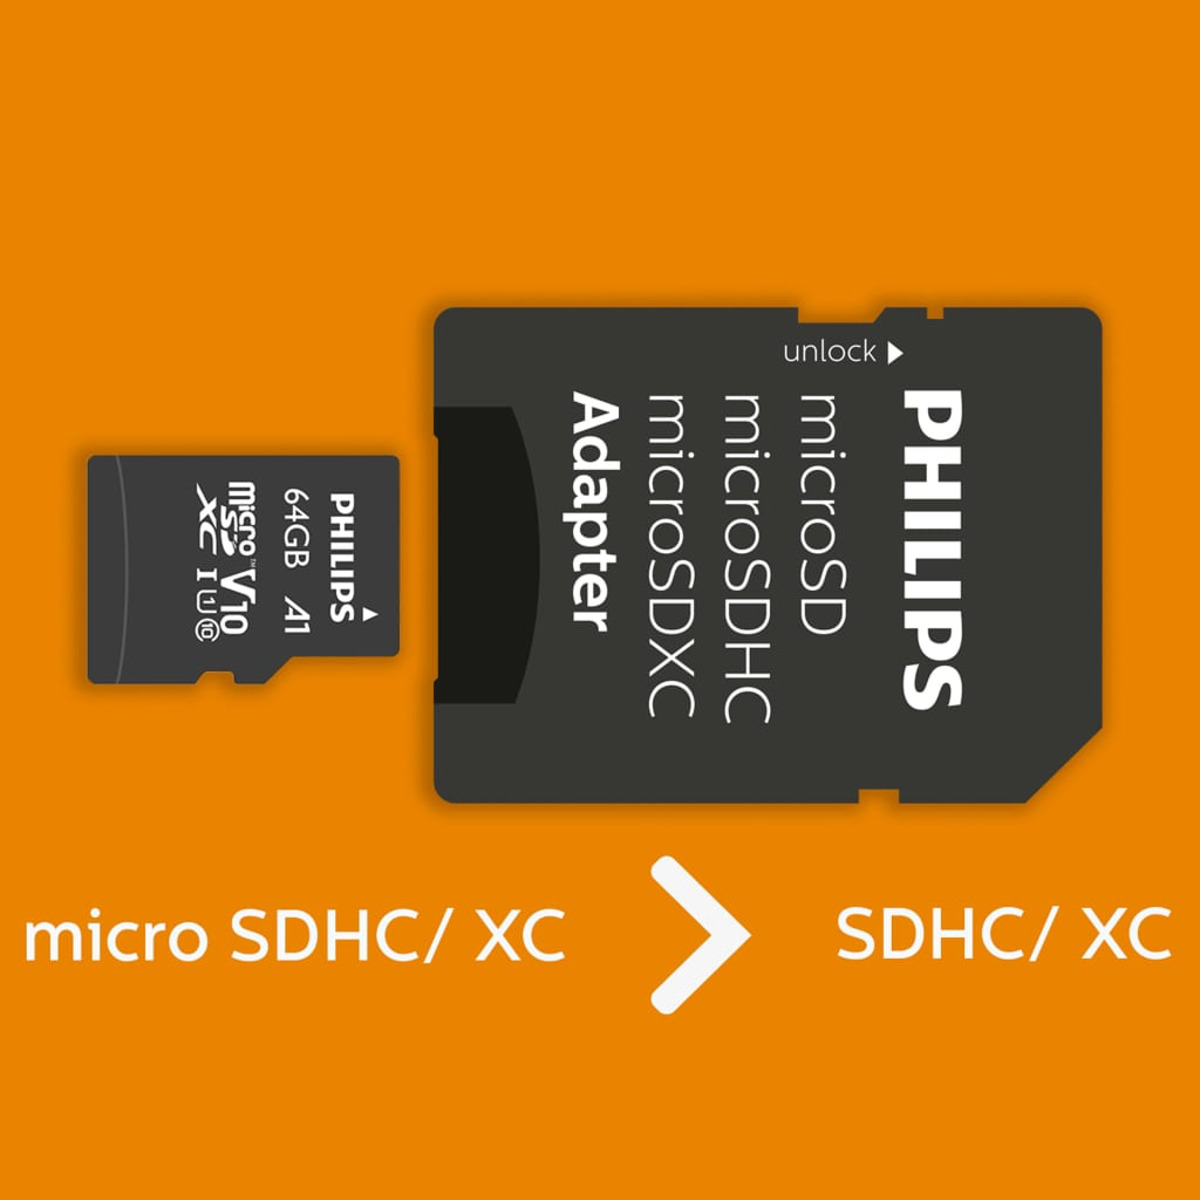 PHILIPS Micro-SDHX 64 Class 64 Mbit/s 10 U1, GB, Adapter, Micro-SDHC UHS-I 80 Speicherkarte